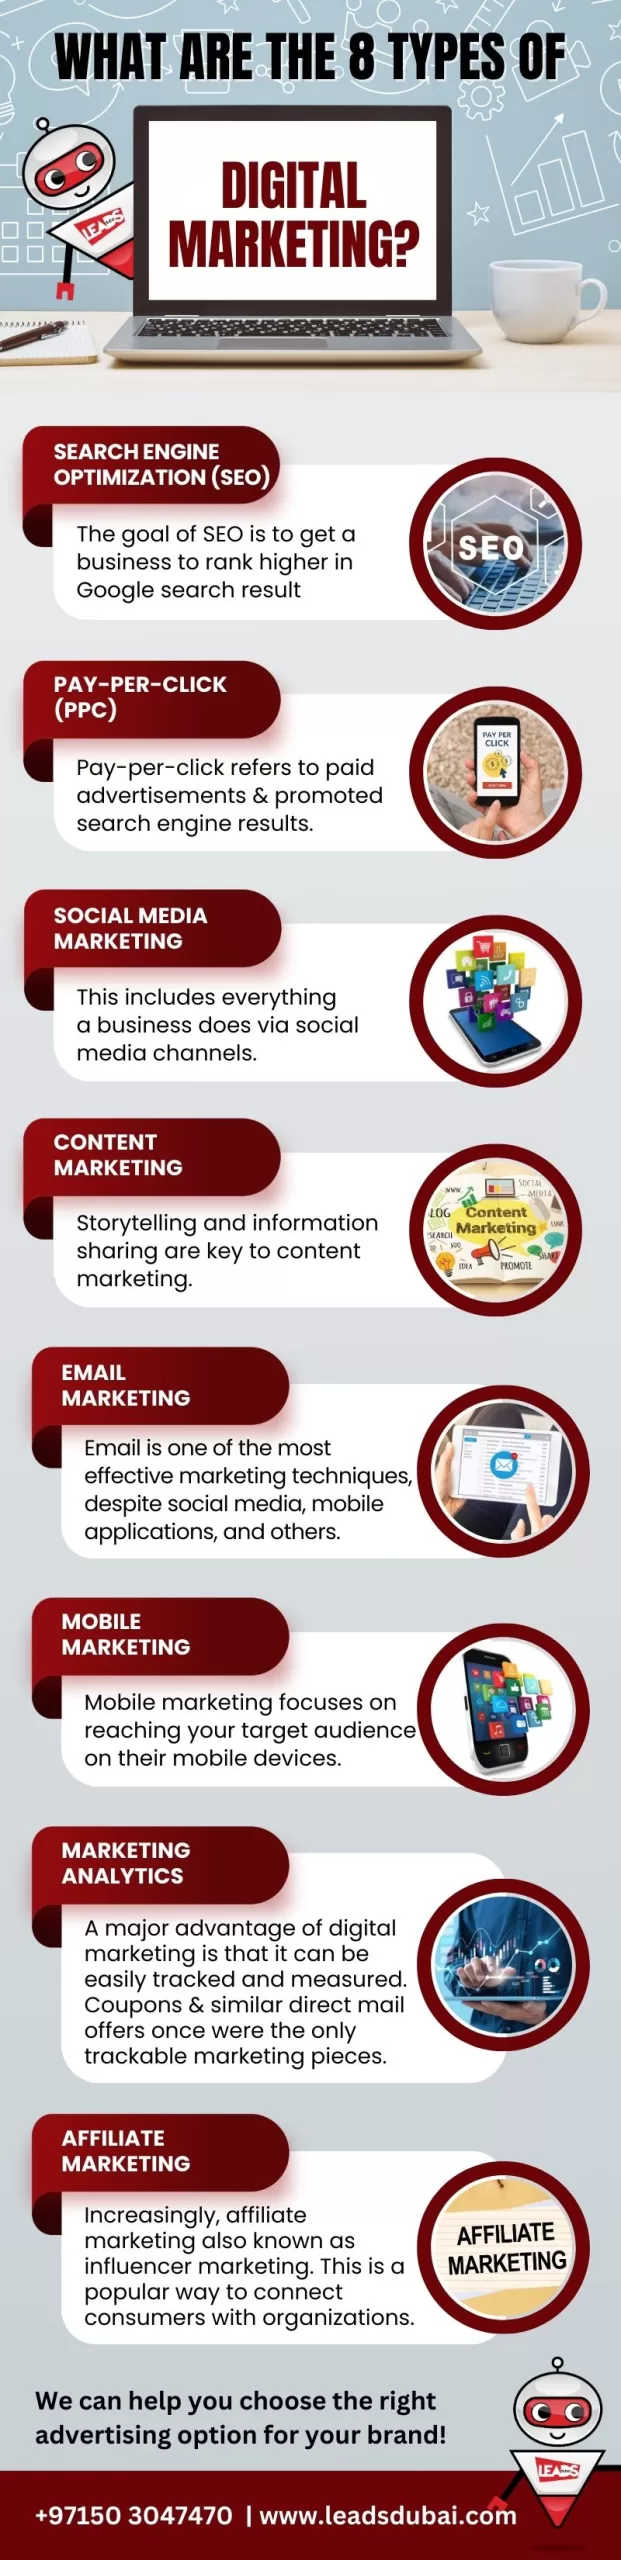 Visual Guide: 8 Types of Digital Marketing
